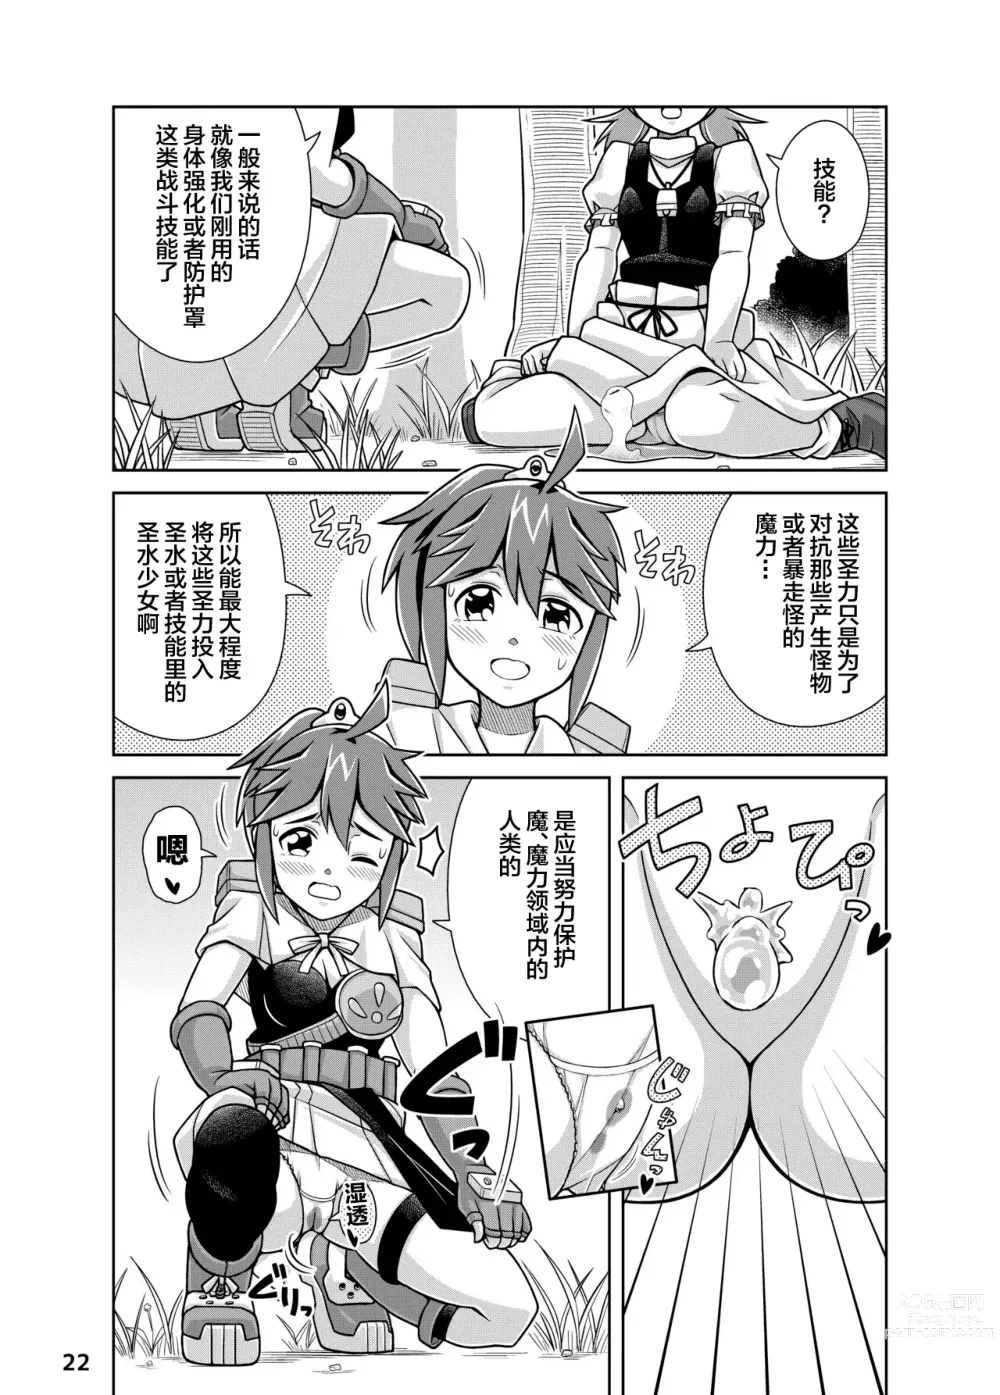 Page 22 of doujinshi 圣水少女之狂想曲1